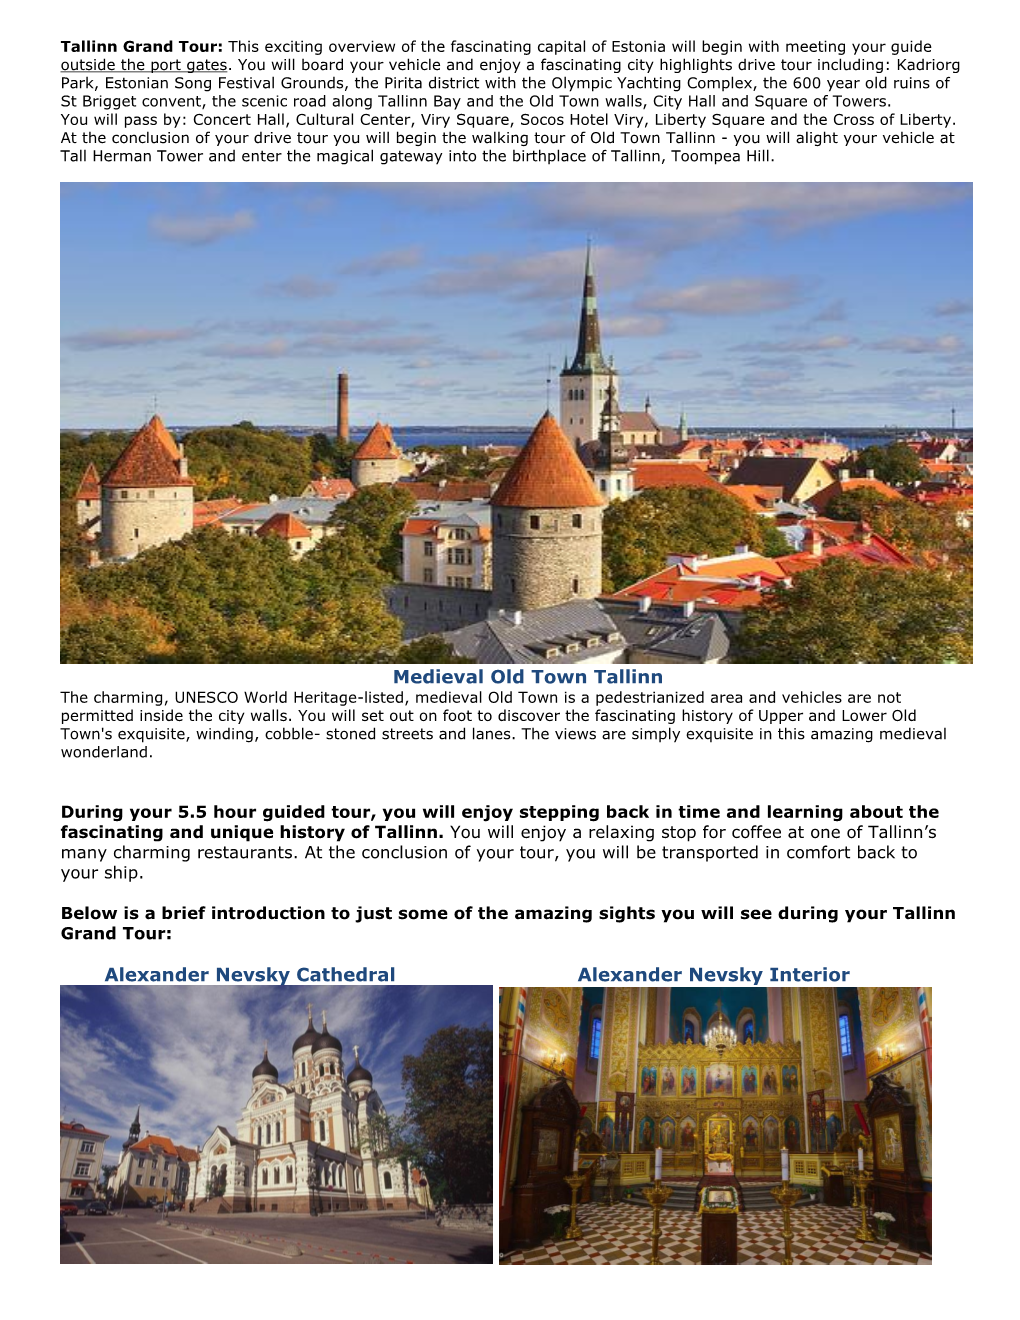 Medieval Old Town Tallinn Alexander Nevsky Cathedral